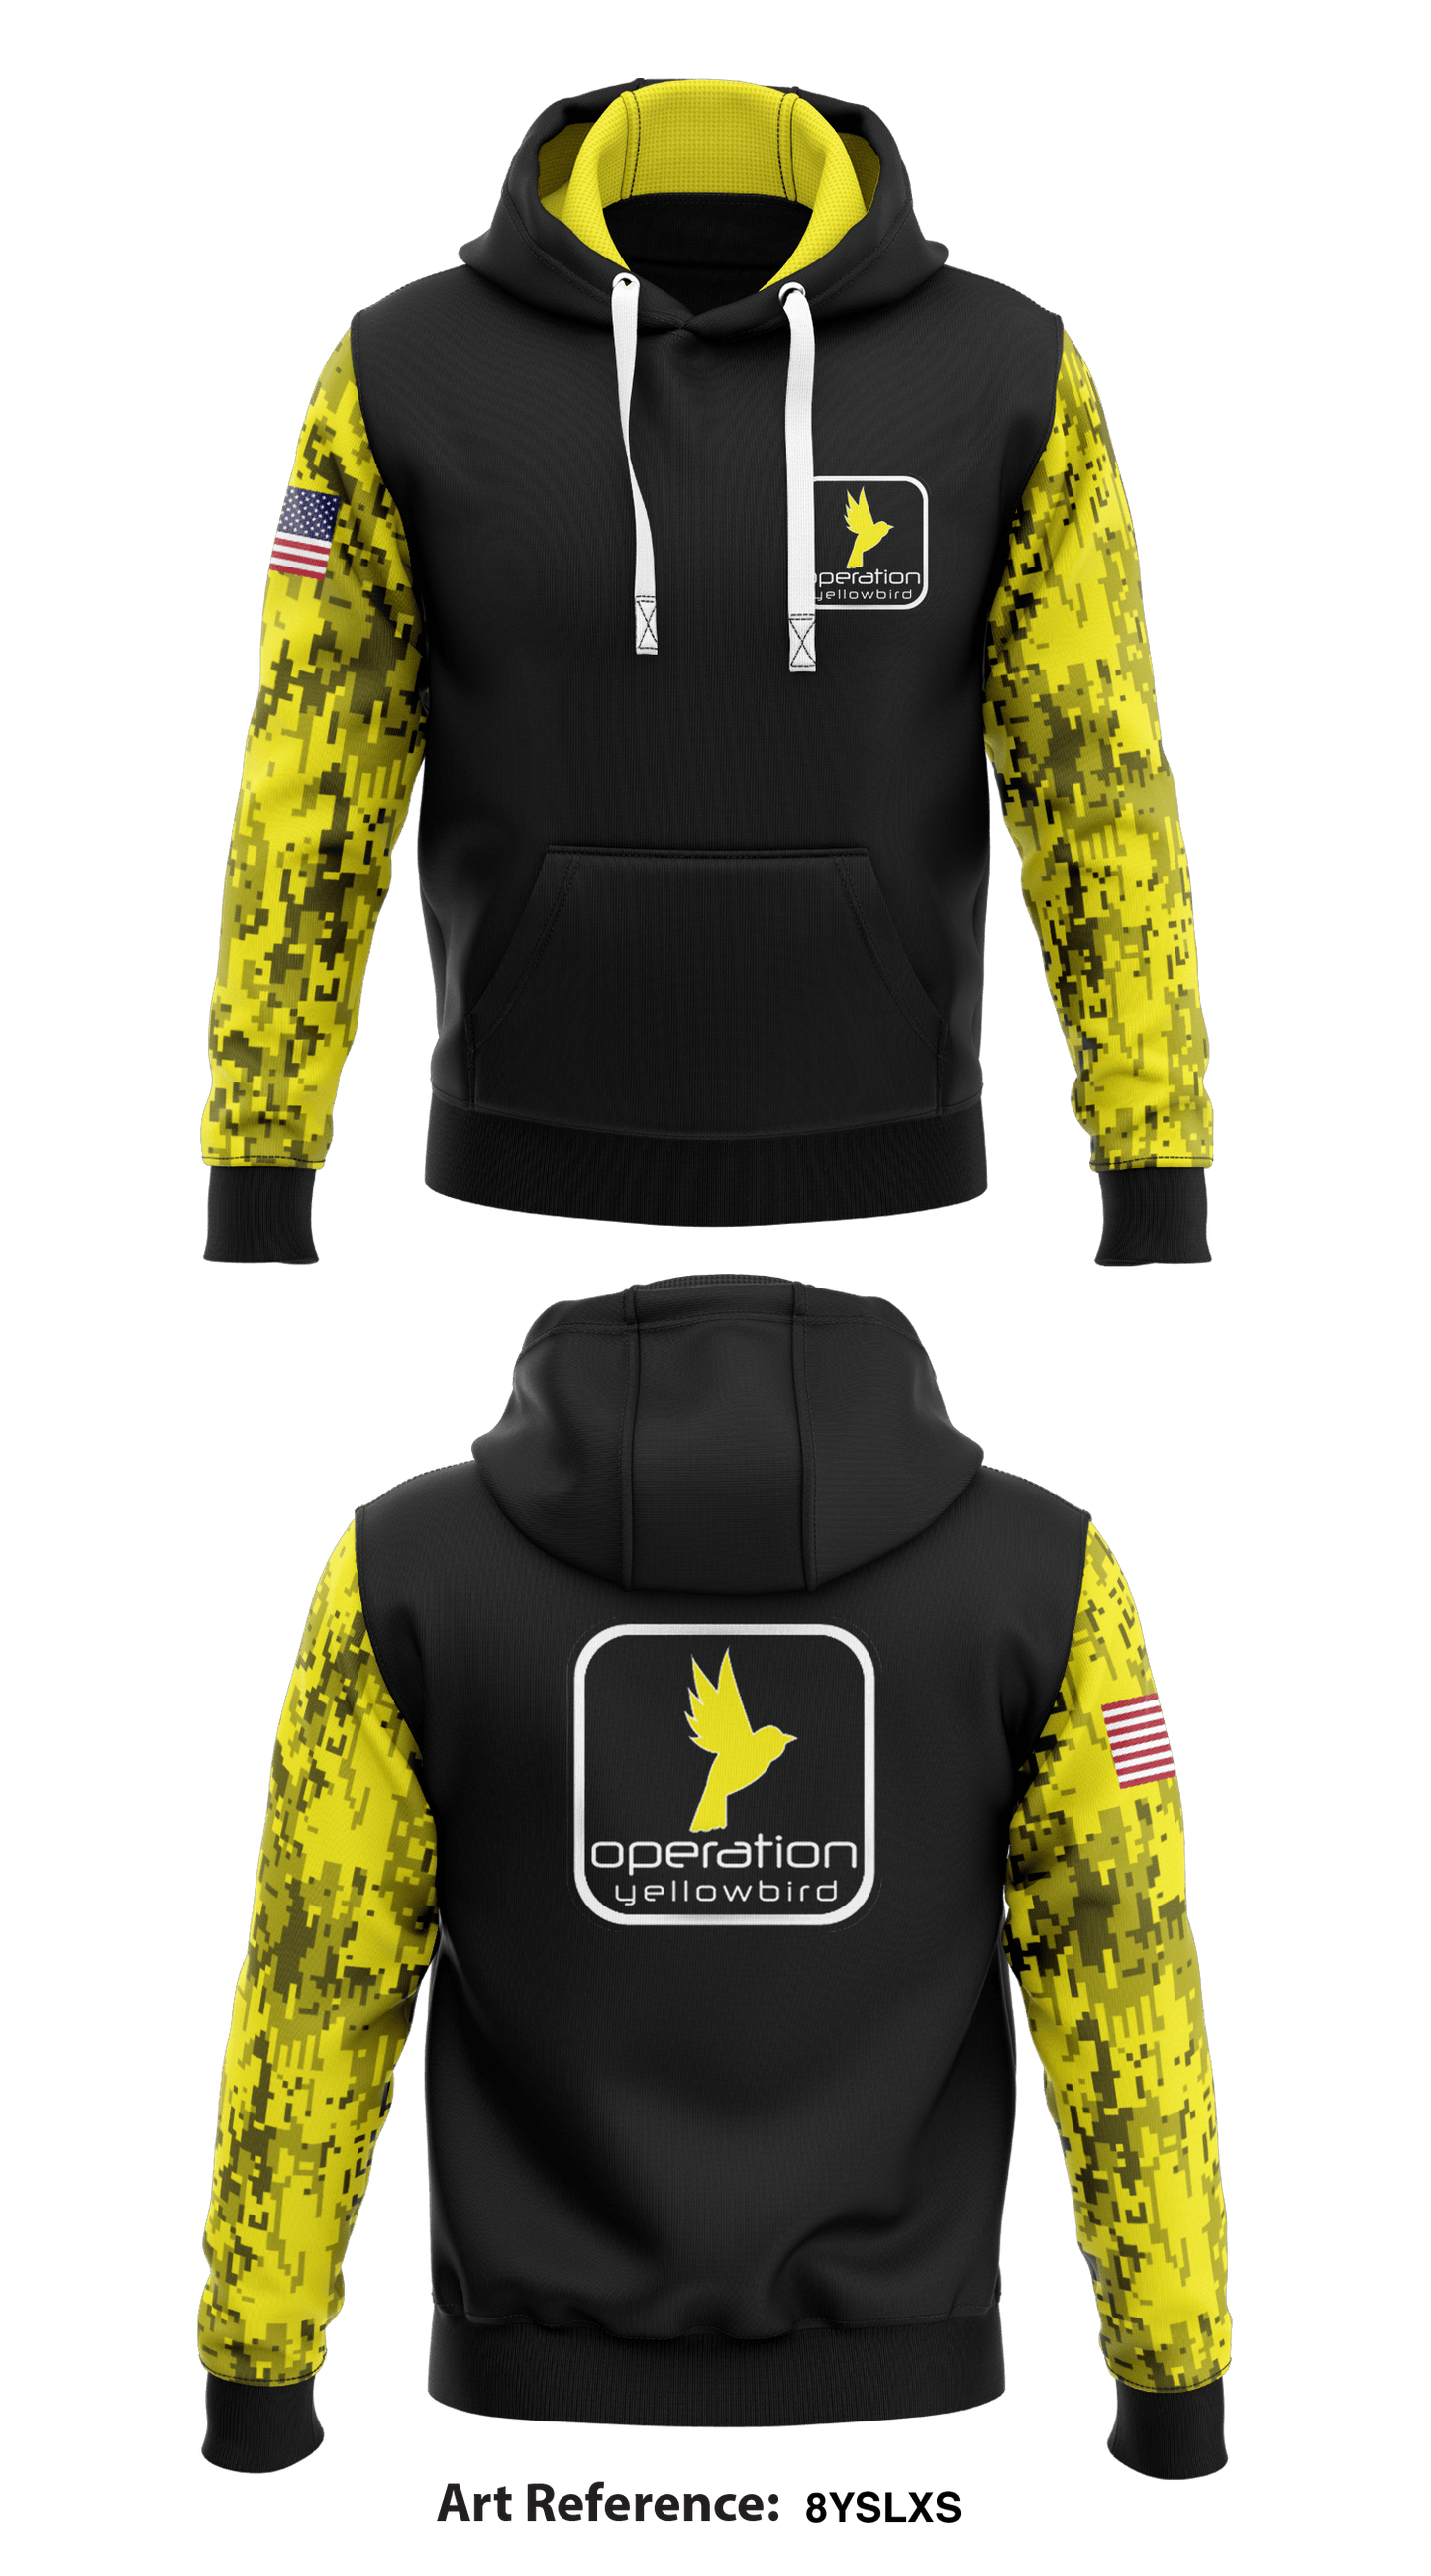 Operation Yellowbird Store 1  Core Men's Hooded Performance Sweatshirt - 8ySLXS